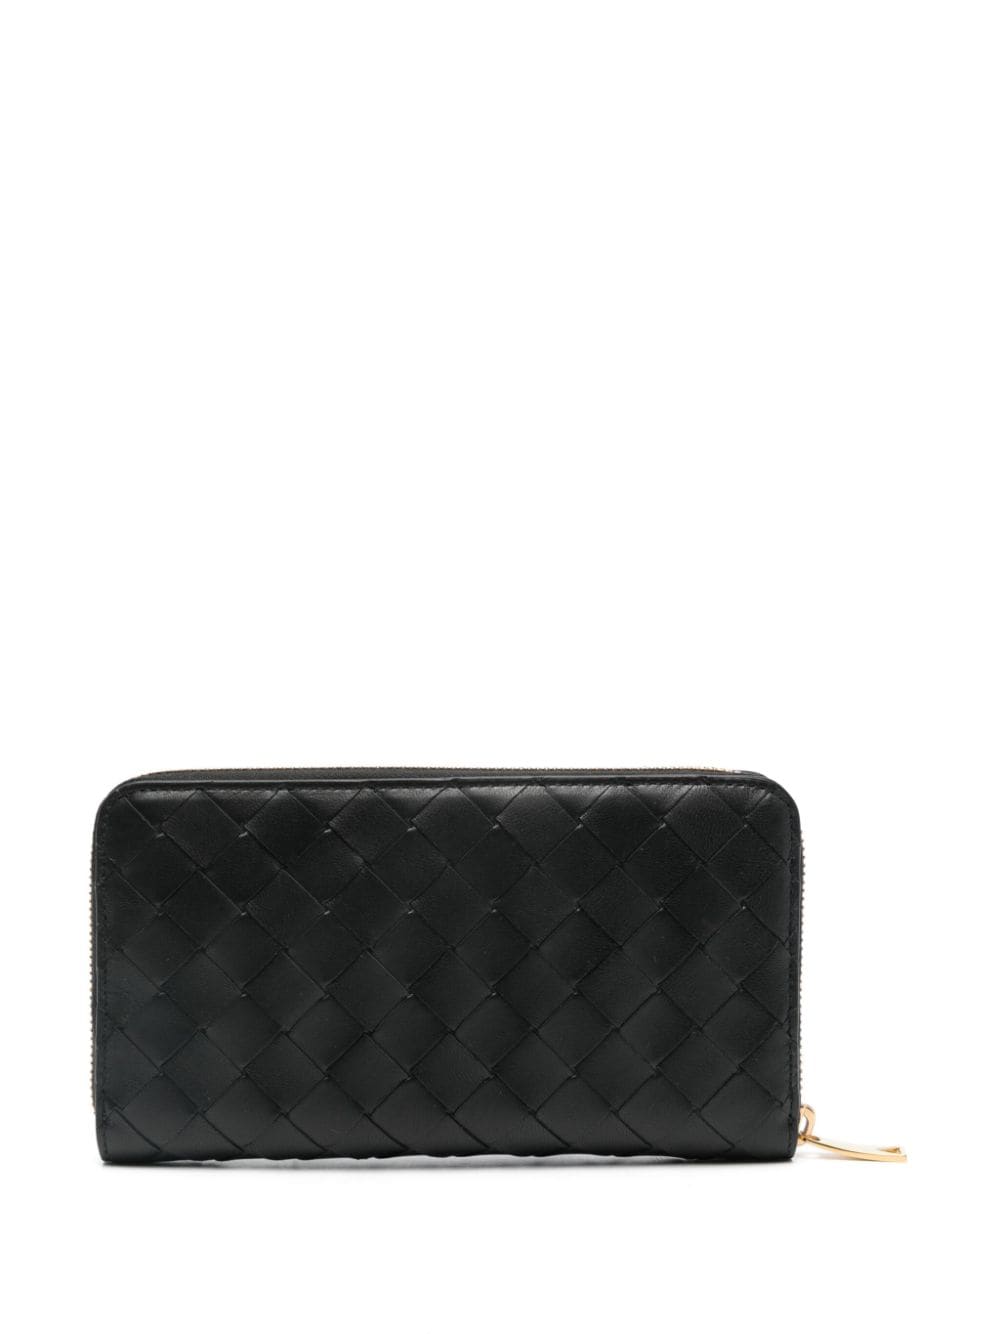 Bottega Veneta Intrecciato leather wallet - Zwart